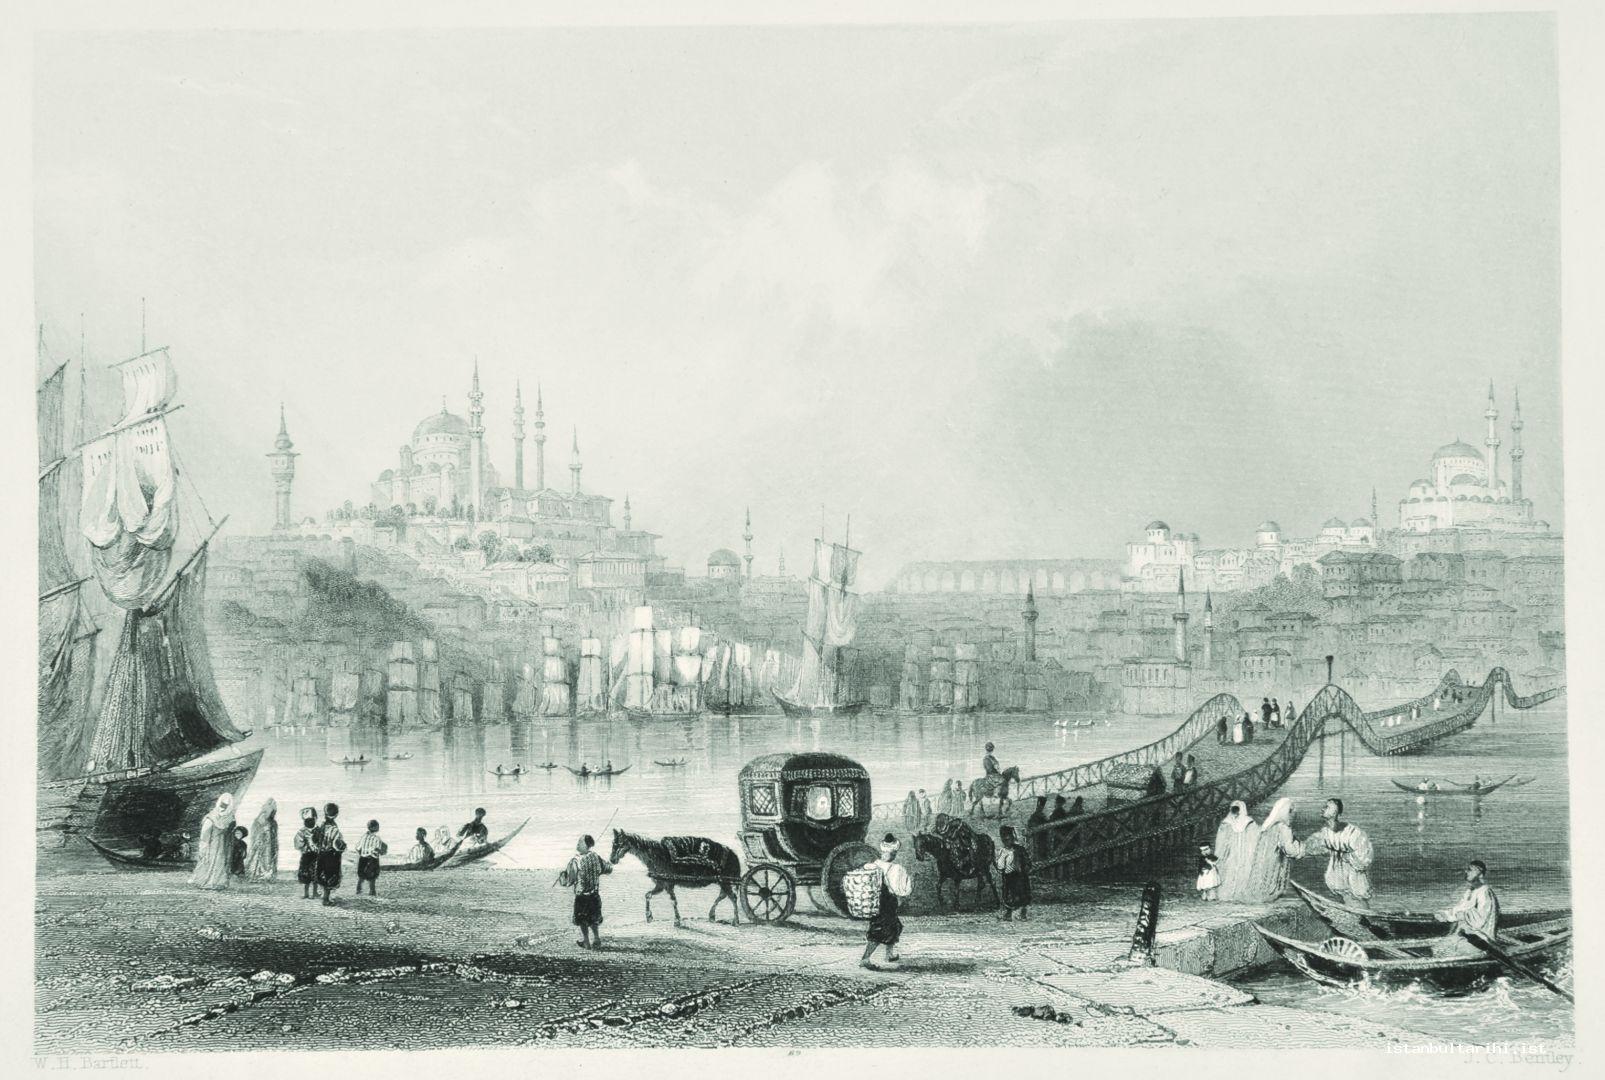 2- “Cisr-i Cedid (New Bridge)” built between Unkapanı and Azapkapı in 1836 (Pardoe)    